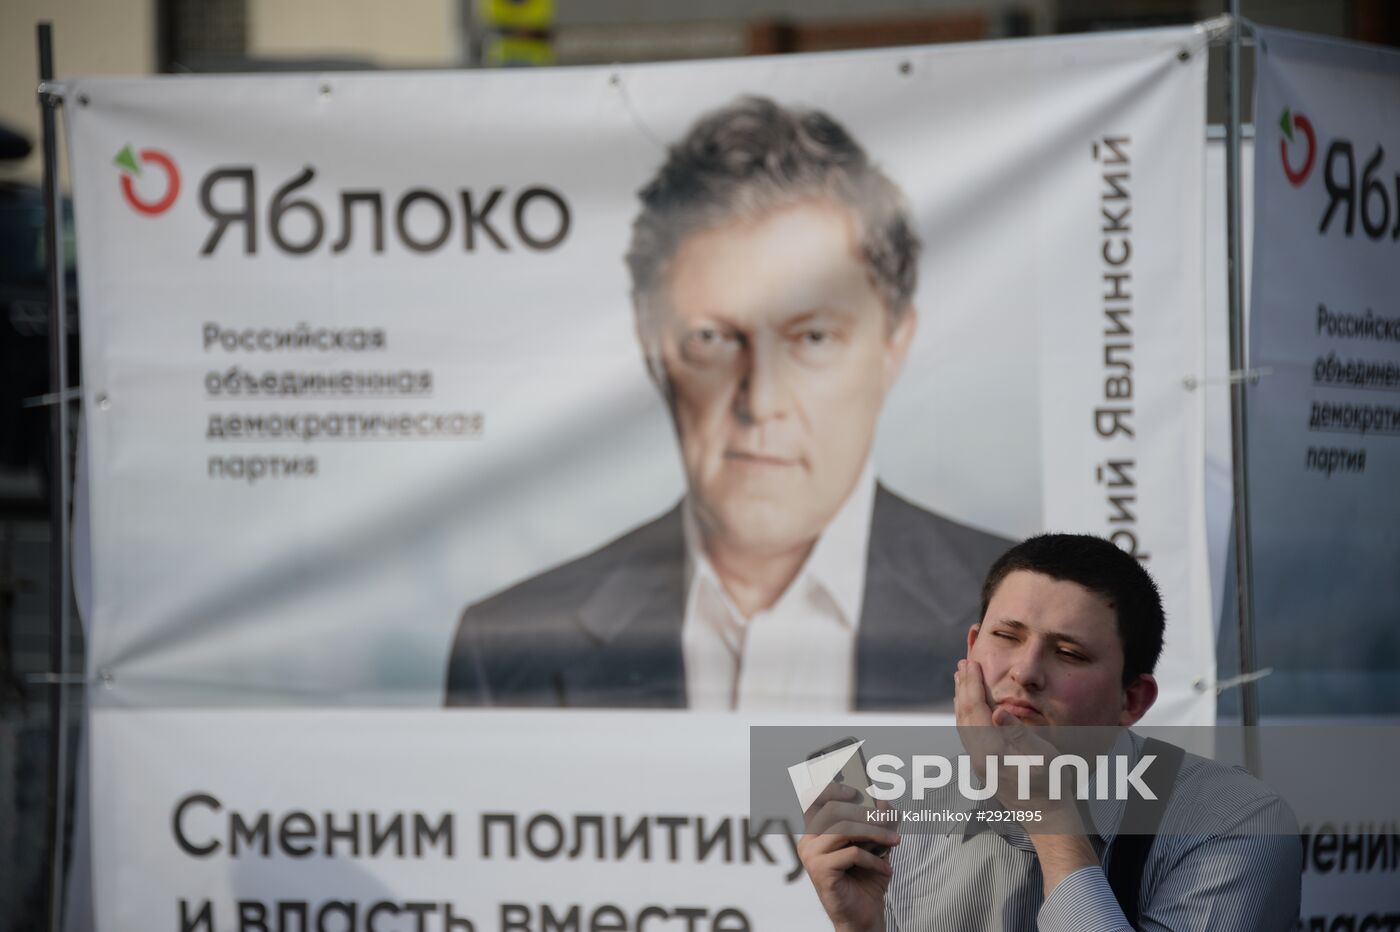 State Duma election campaigning